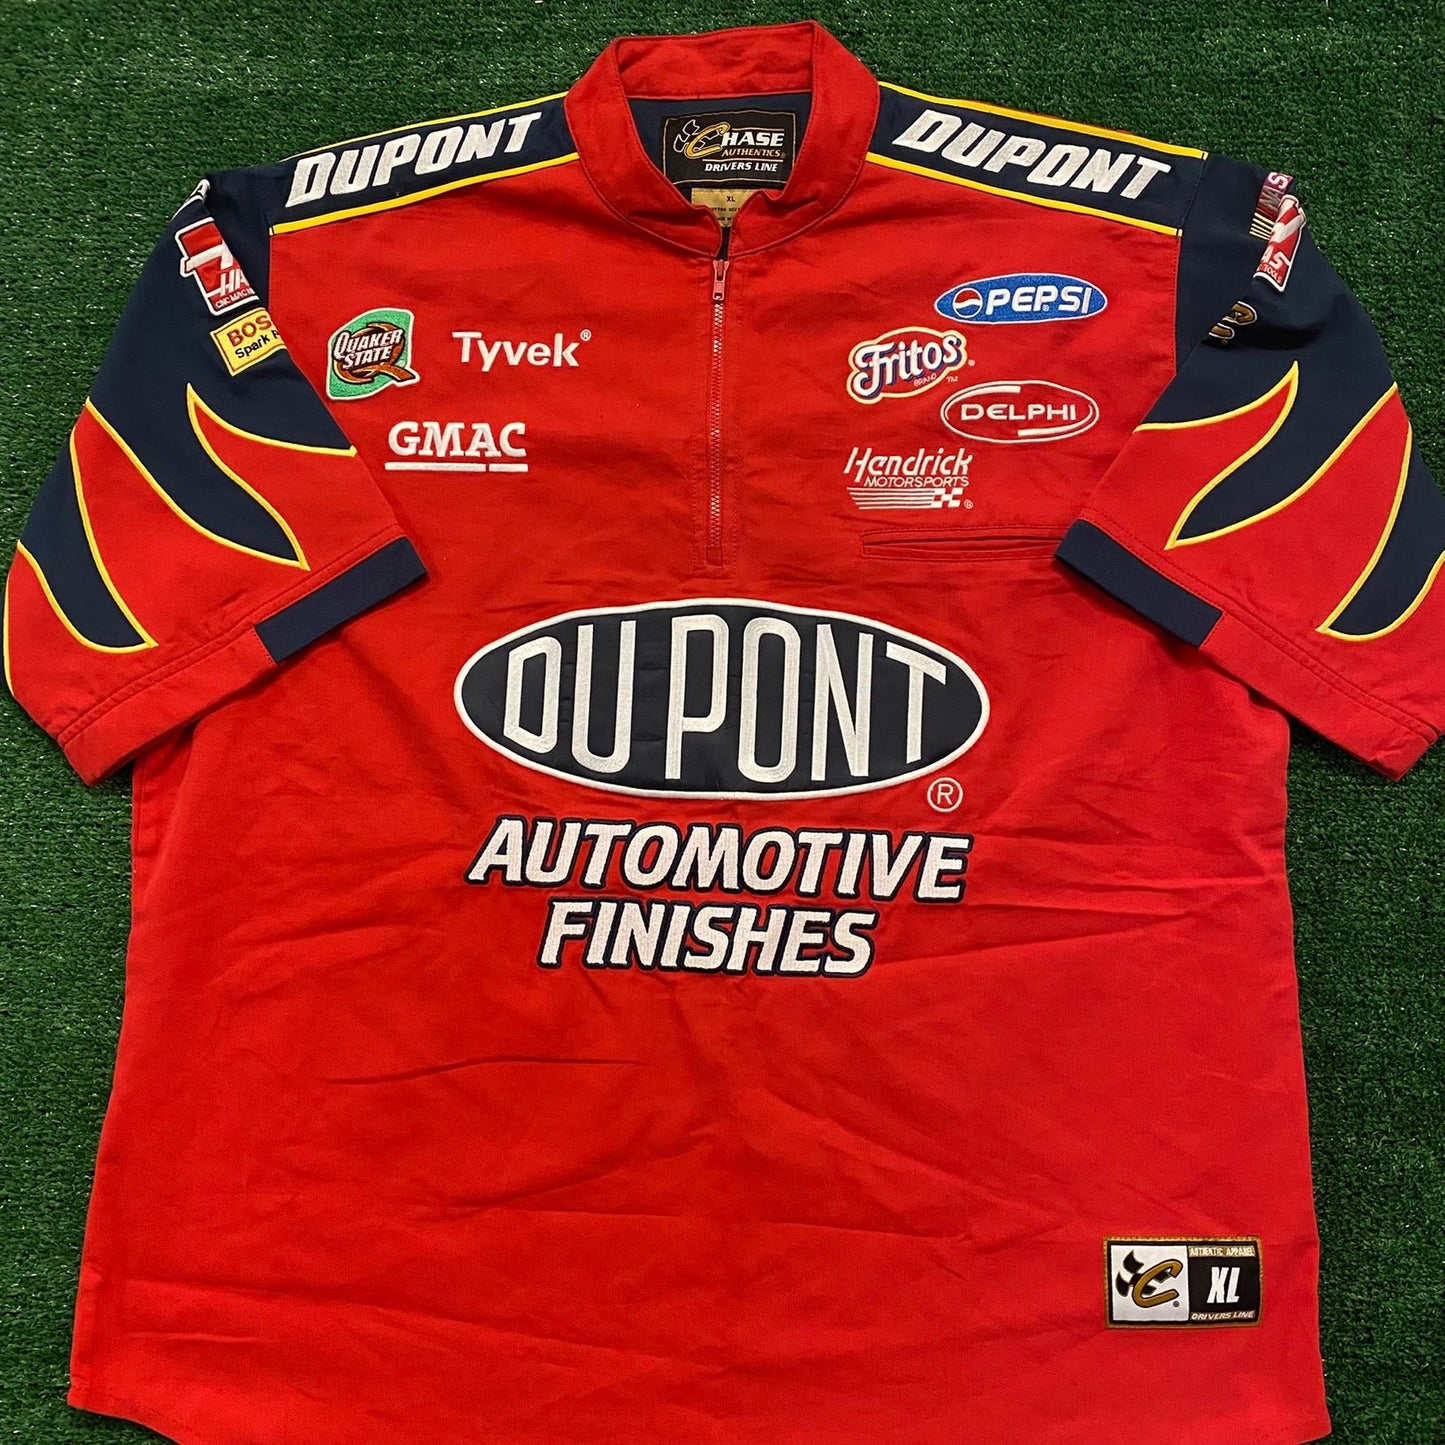 Dupont Vintage 90s NASCAR Racing T-Shirt